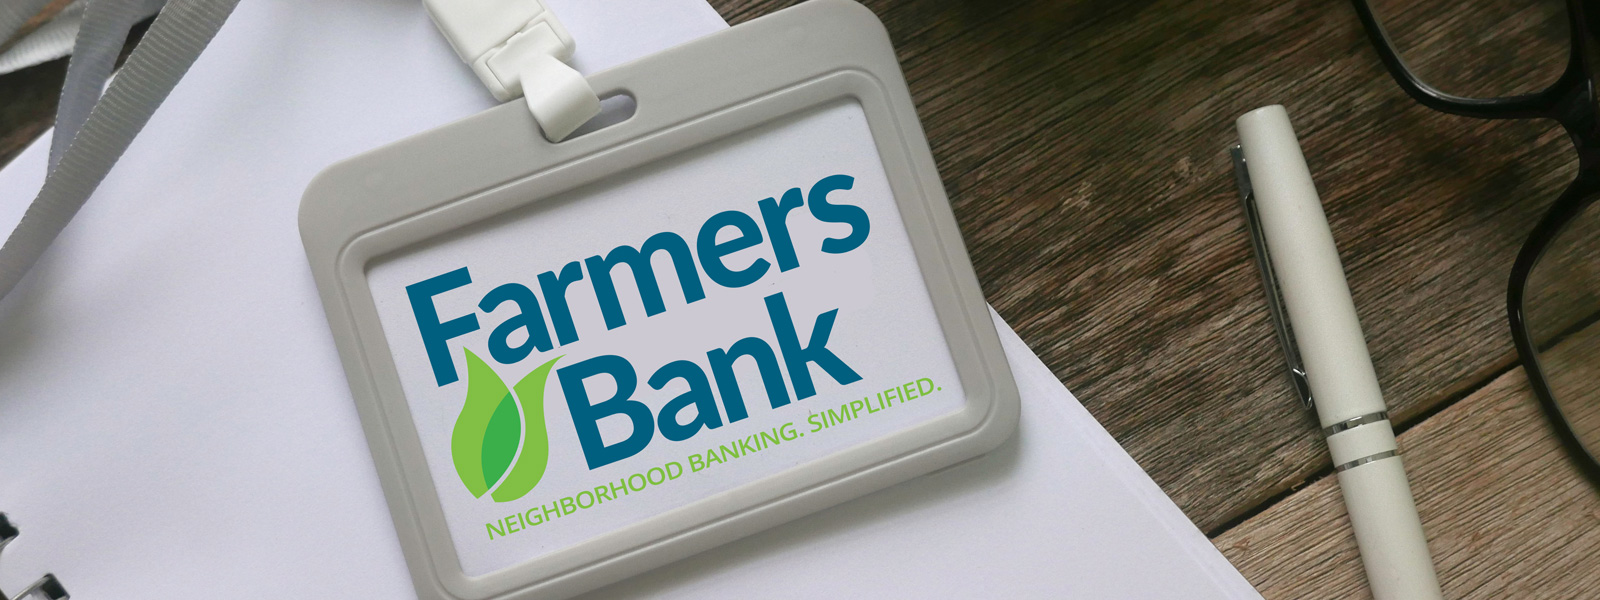 farmers bank employee directory